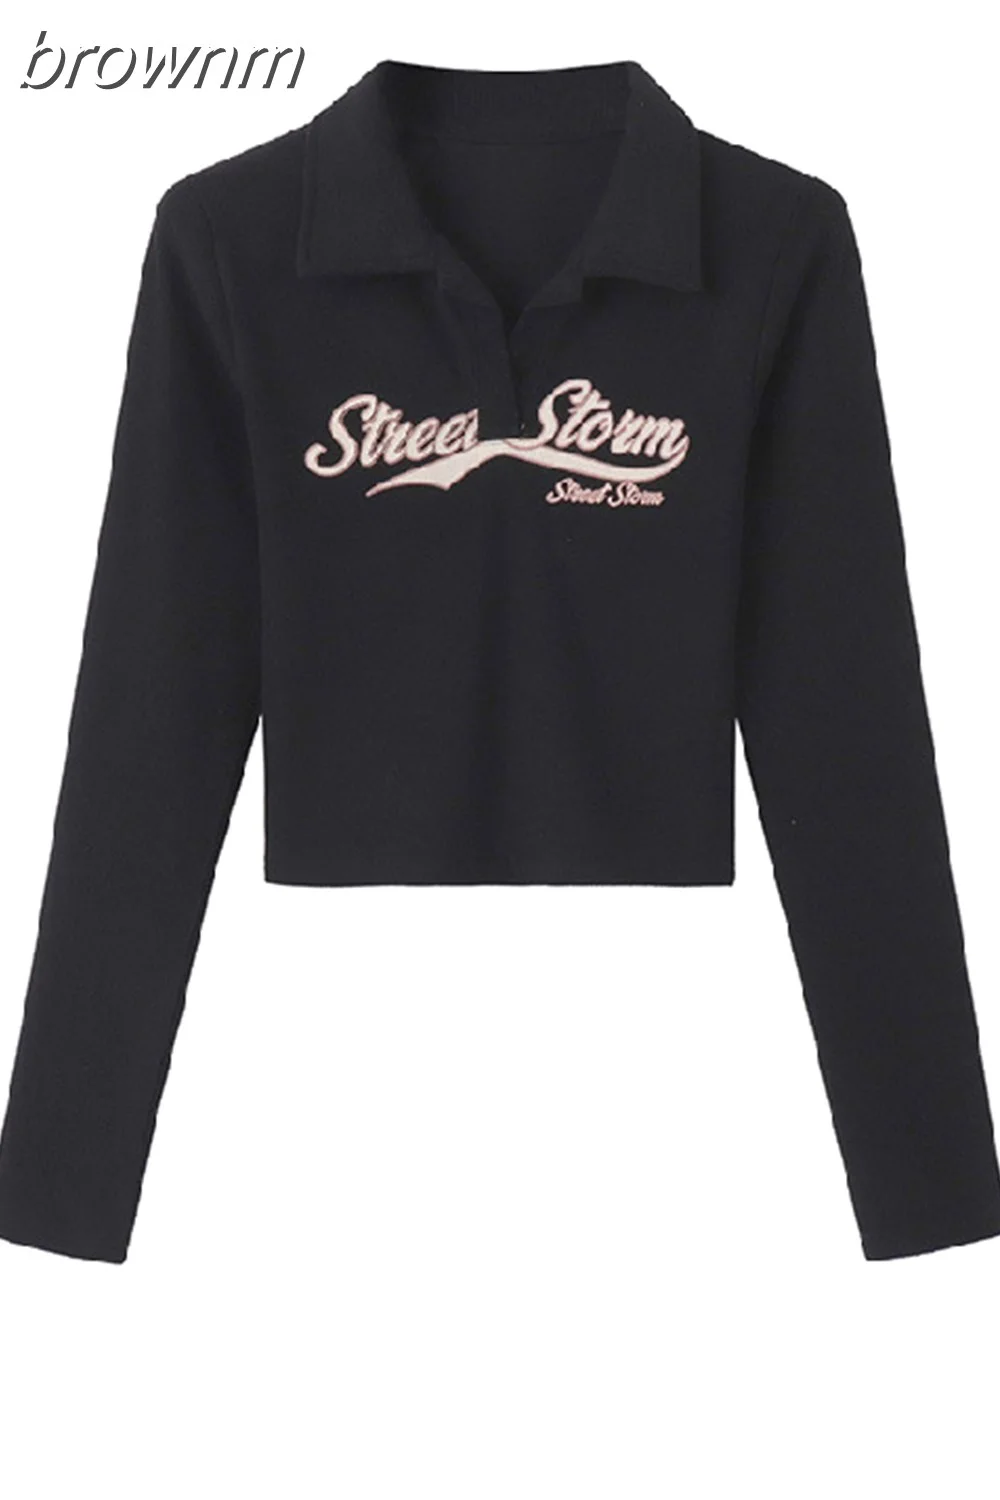 brownm Retro Graffiti Print T Shirt Women Slim Crop Ribbed Top Polo Collar Y2k Elastic Tight Streetwear Long Sleeved T-shirts